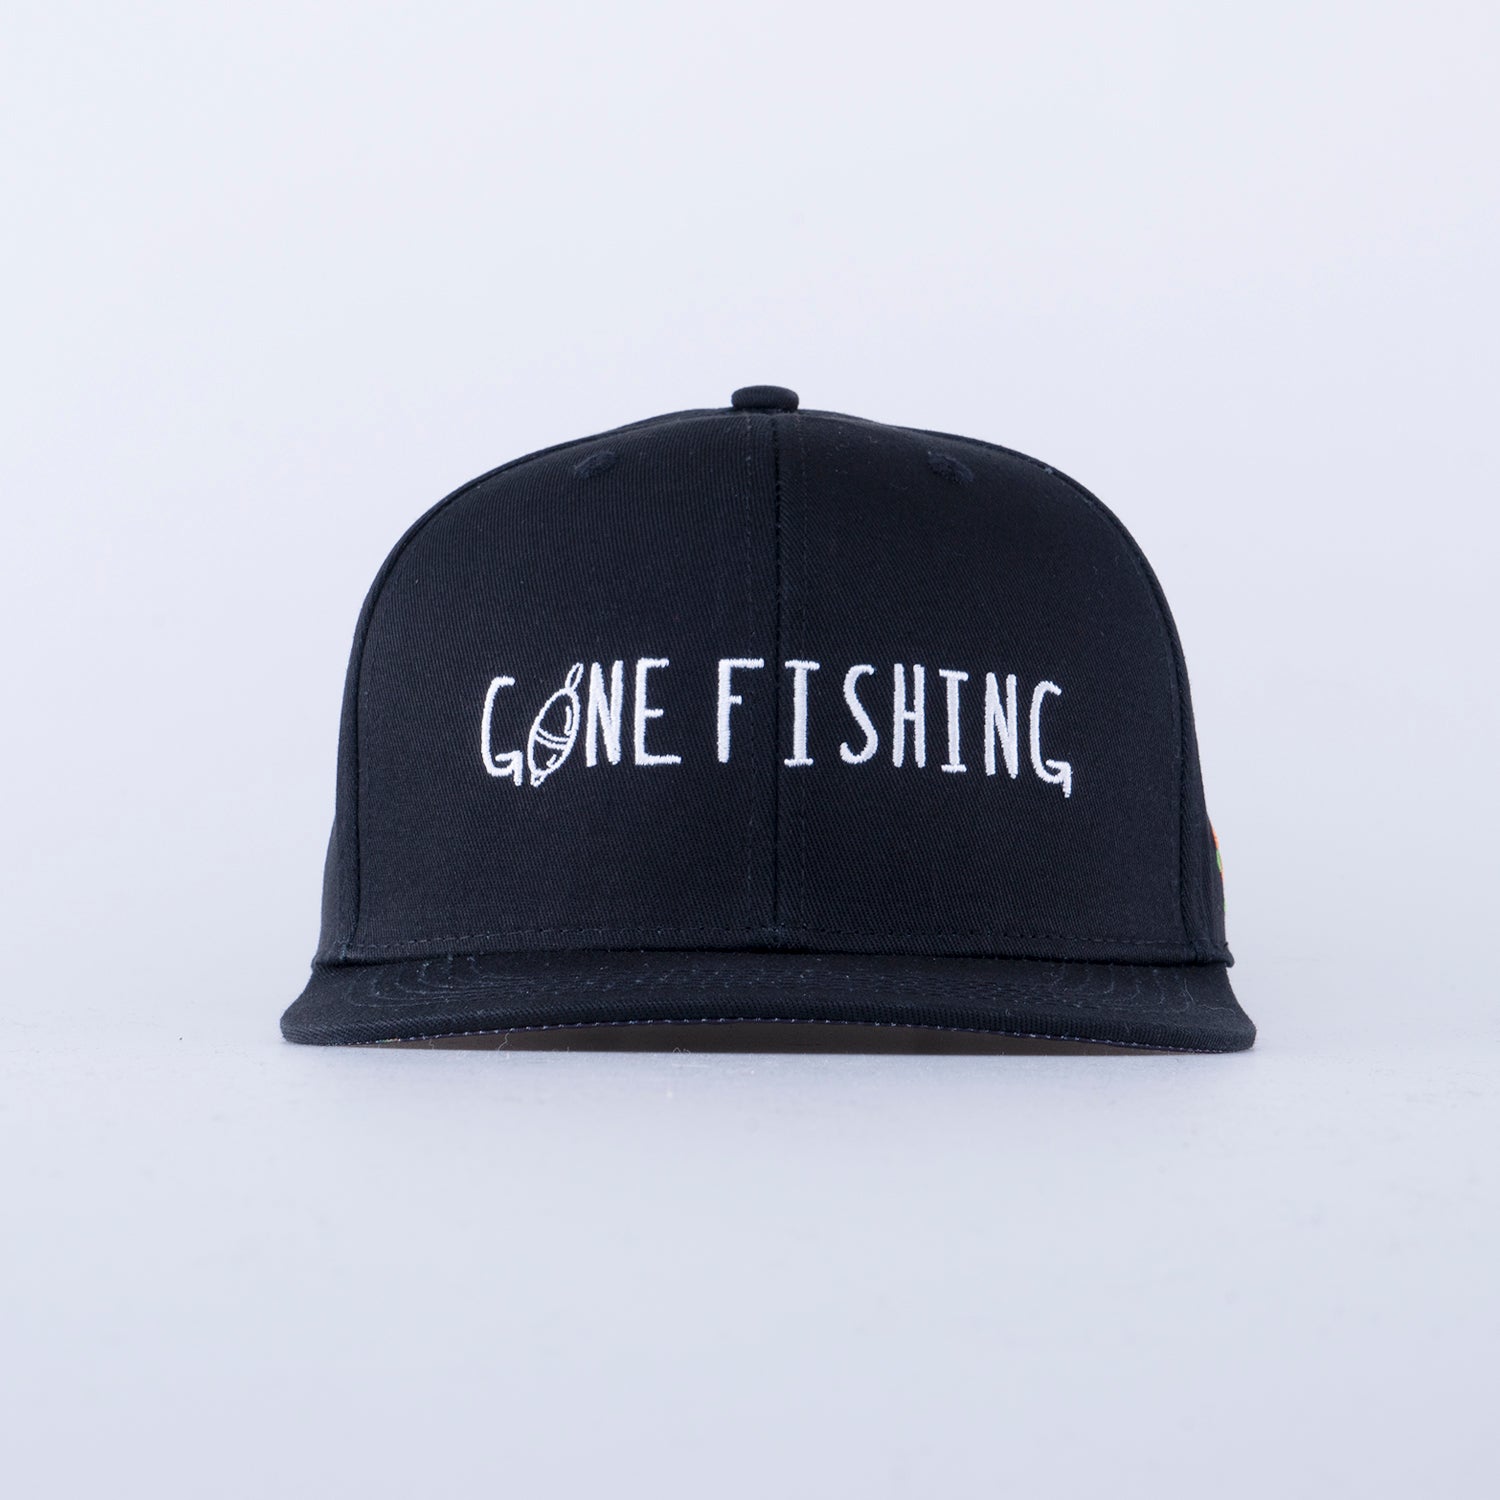 GONE FISHING CAP - BLACK